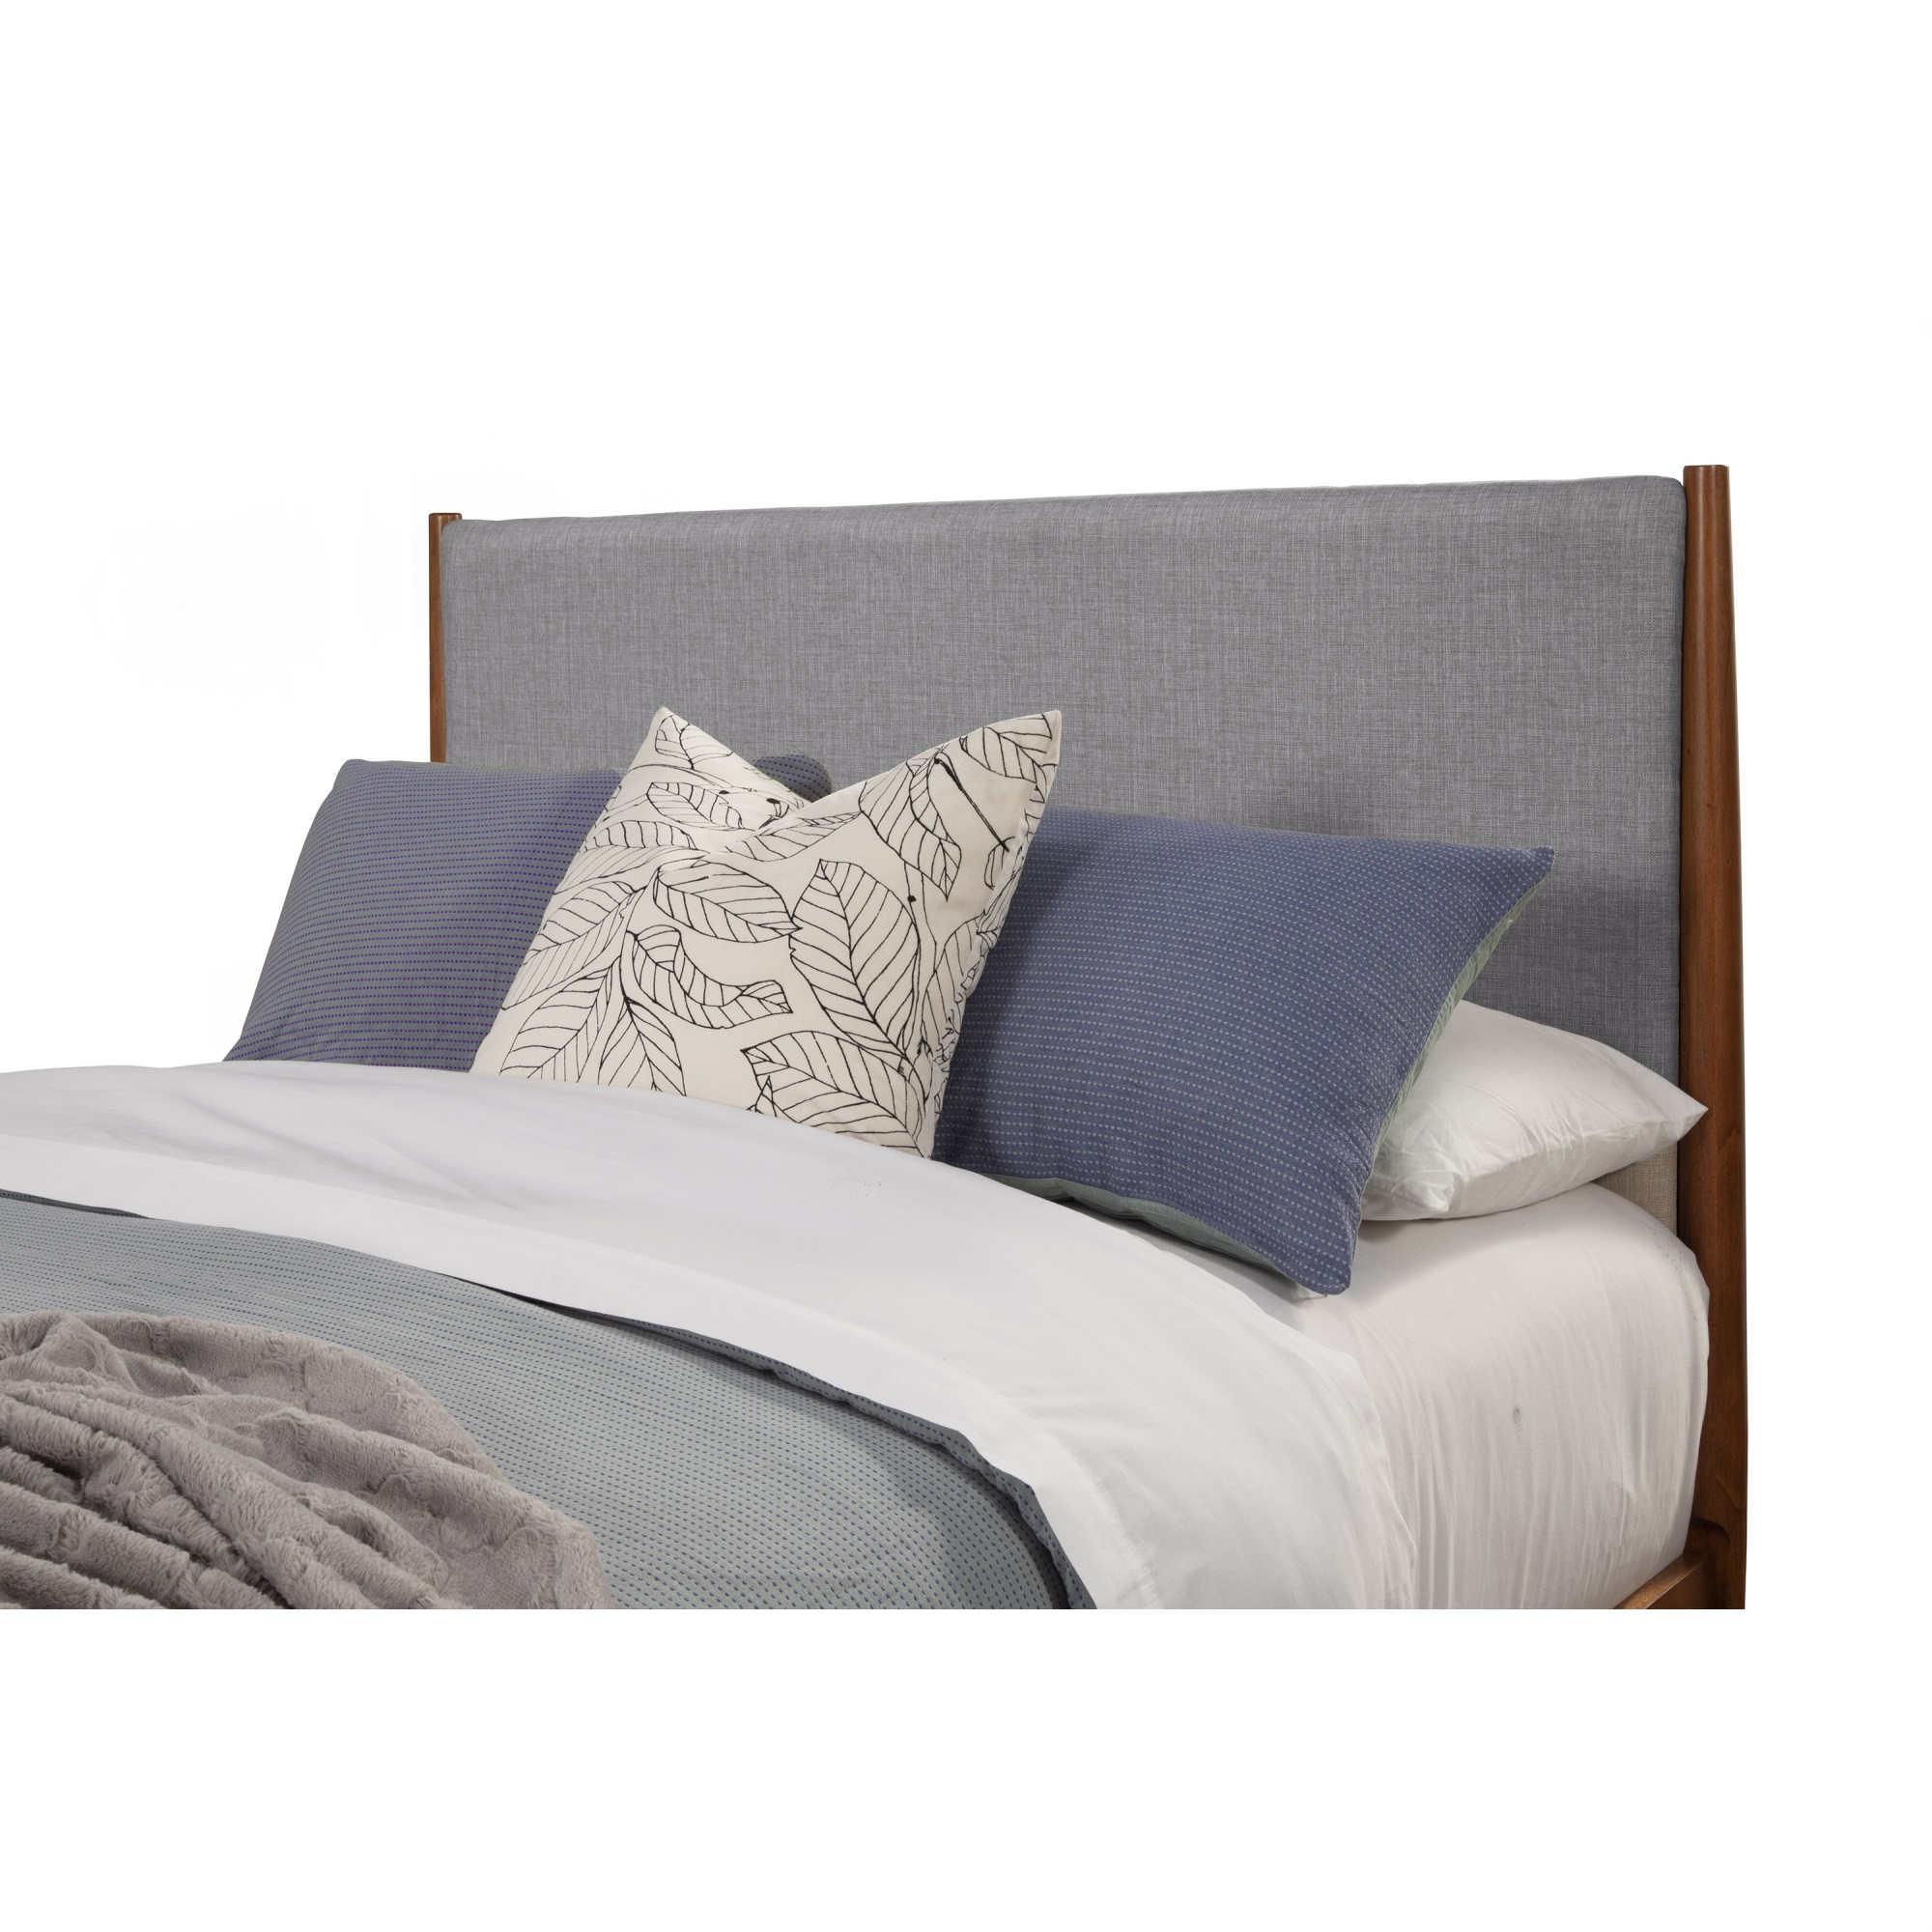 IDEAZ International LLC 1484APB Brown/Grey Contemporary Queen Panel Bed